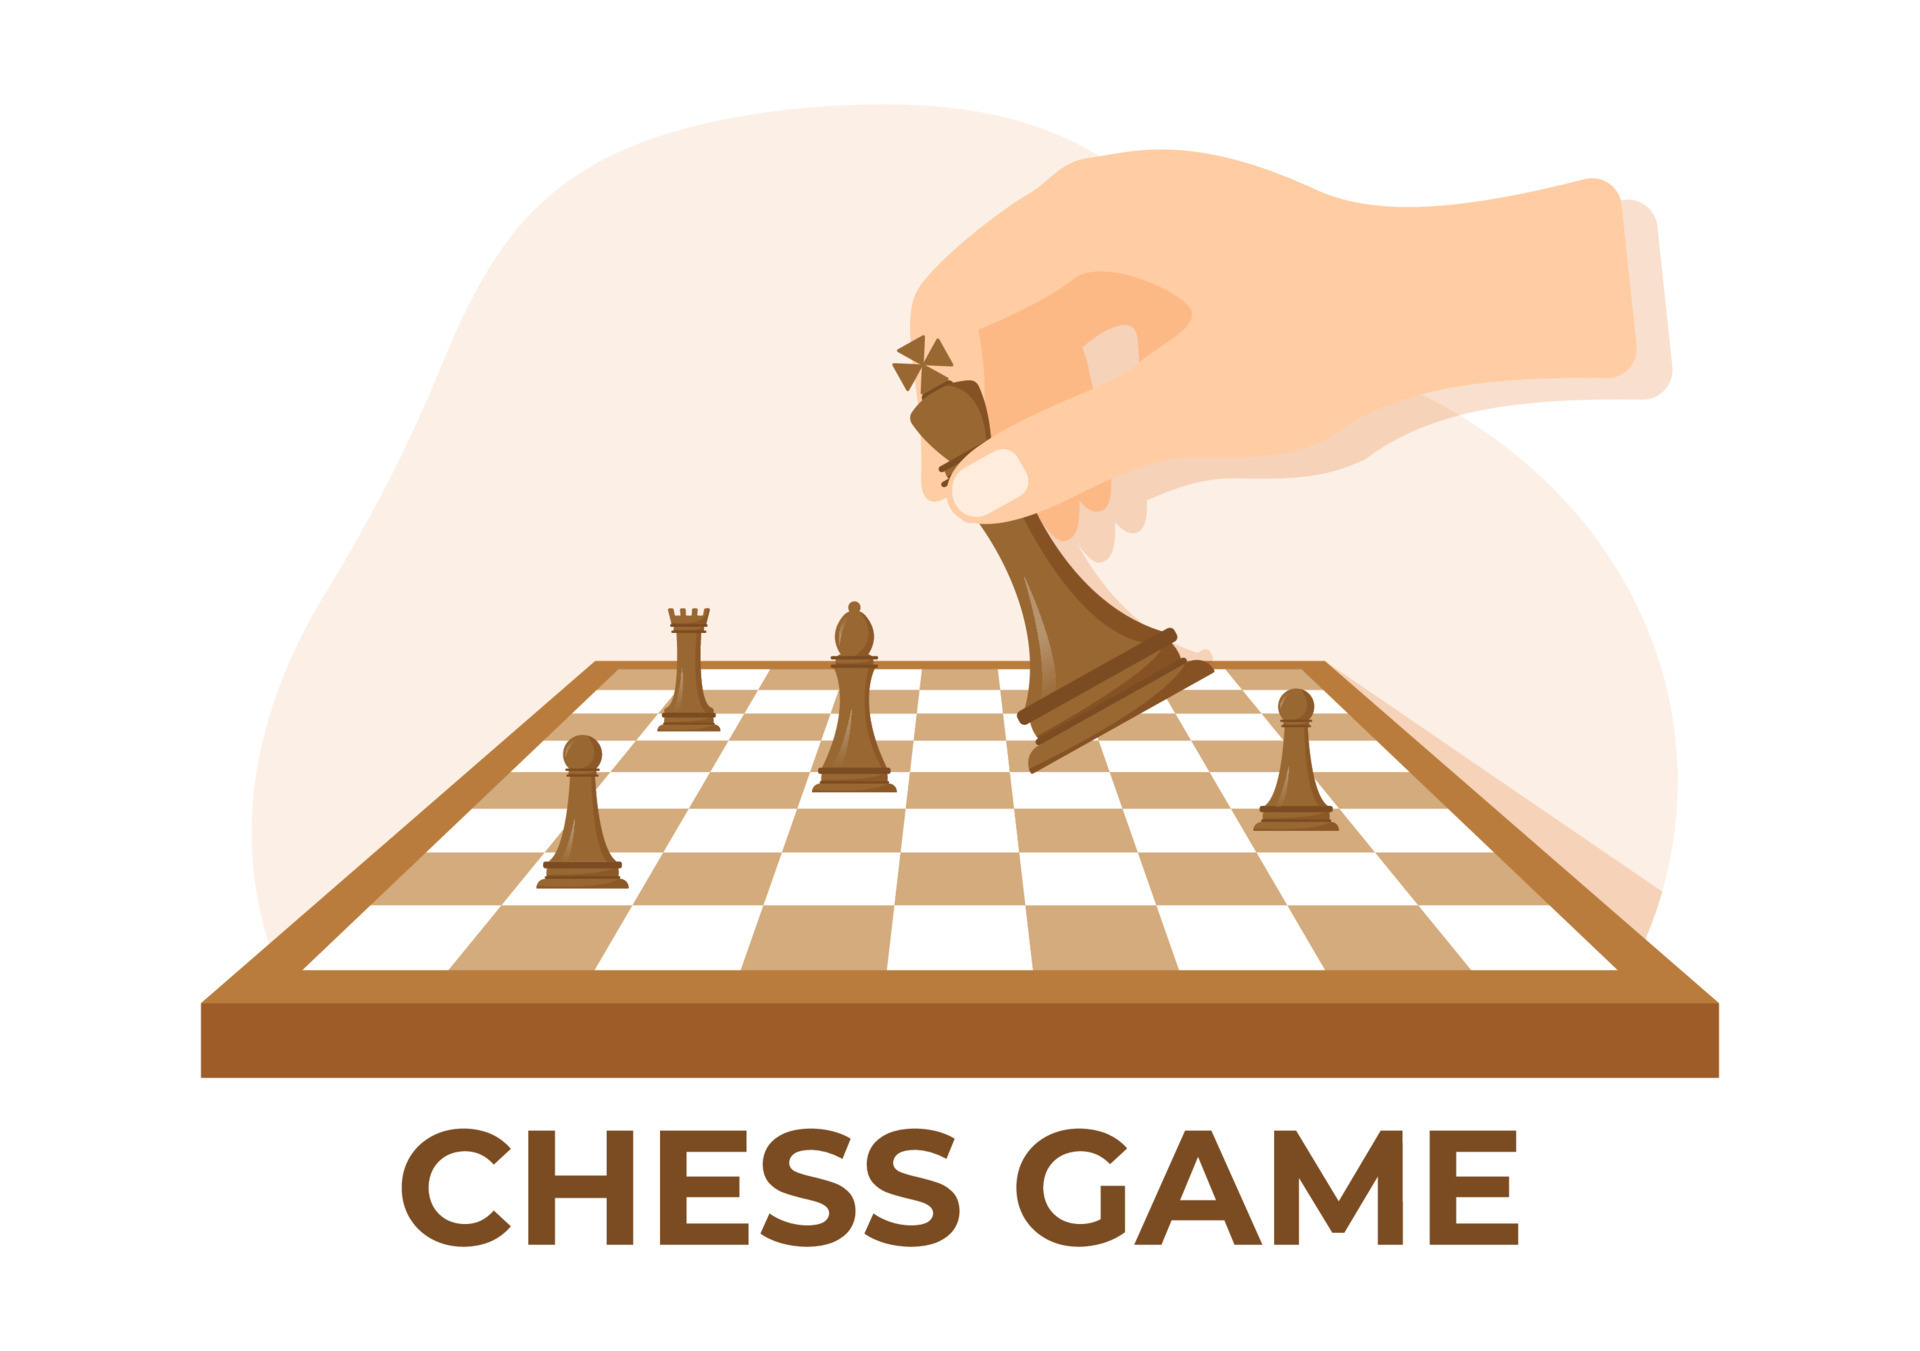 Desenho de xadrez